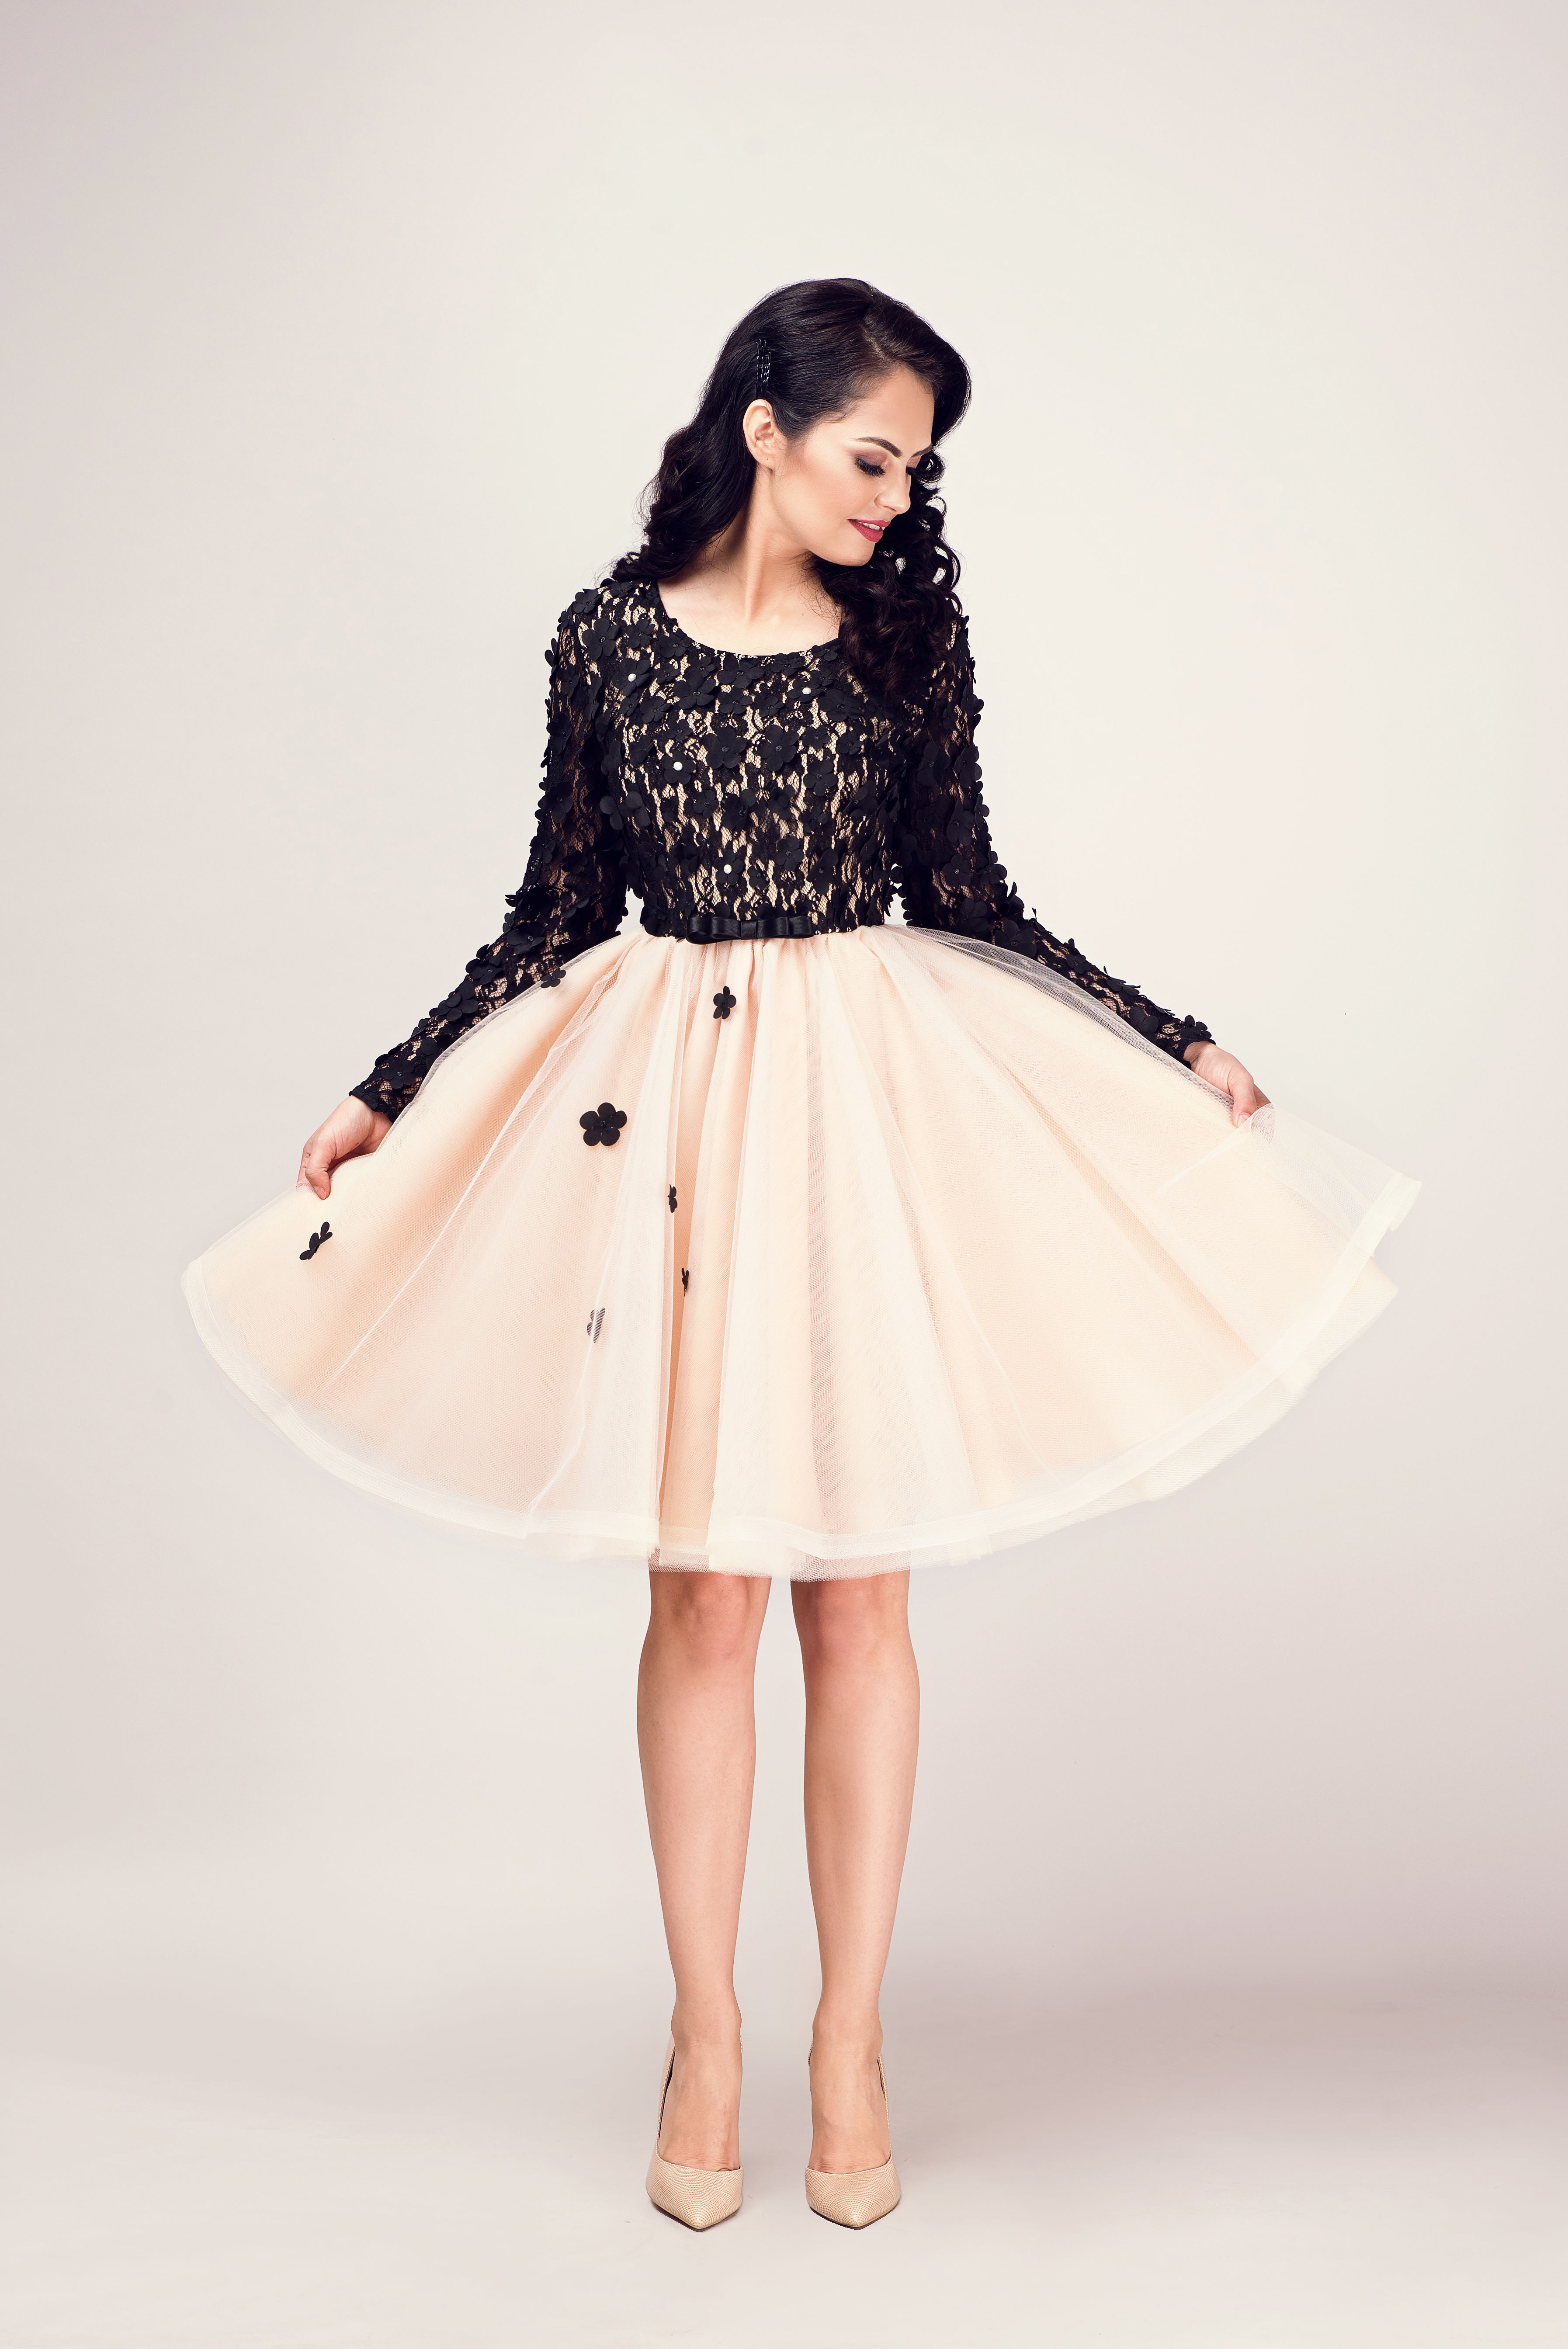 Crete nothing Sloppy Black Daisy Dress - Hira Design - Occassion Dresses